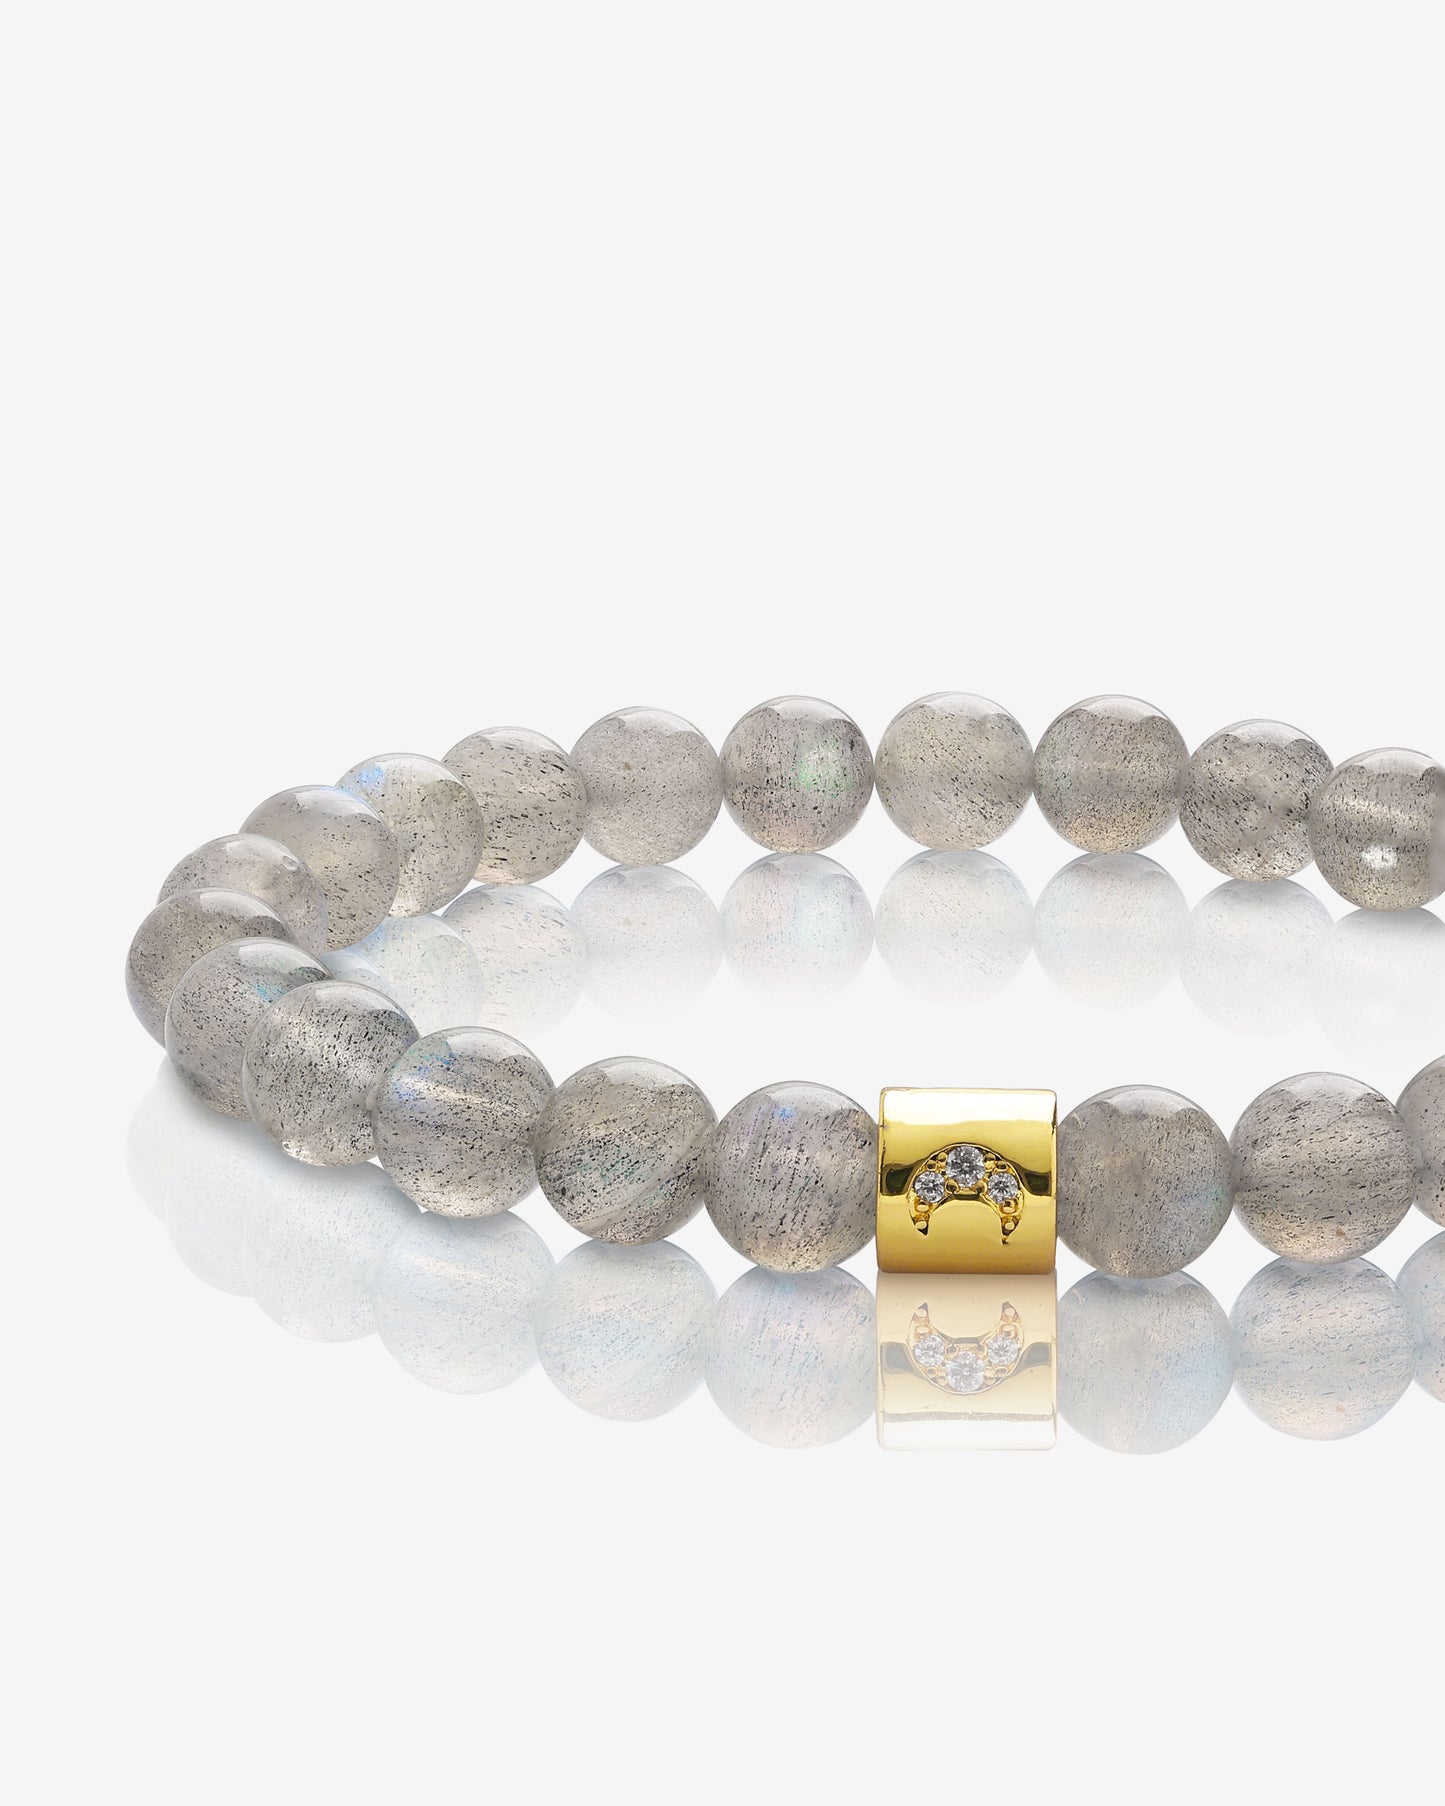 Moon Rondelle on Grey Moonstone Bracelet